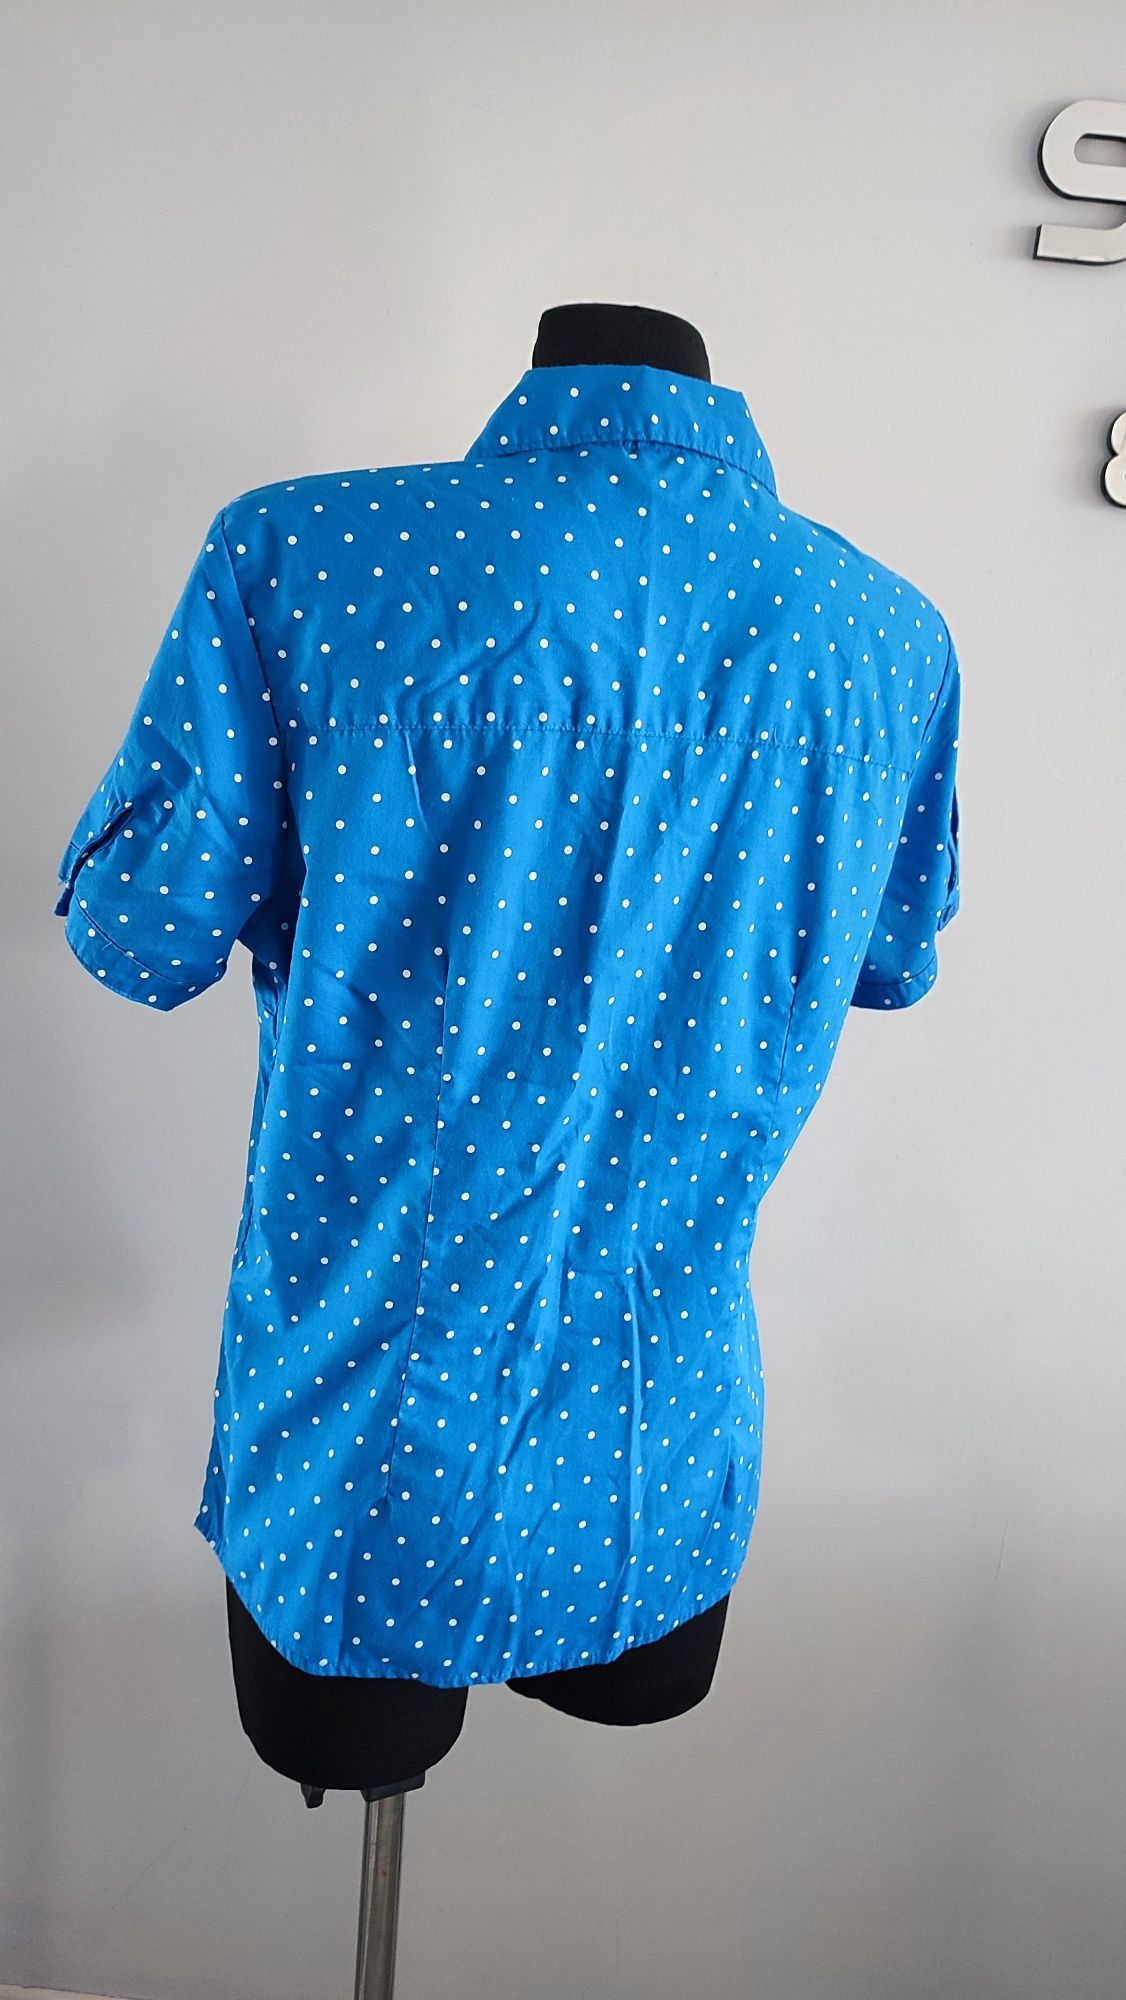 Koszula koszulka damska niebieska grochy kropki 55% bawełna